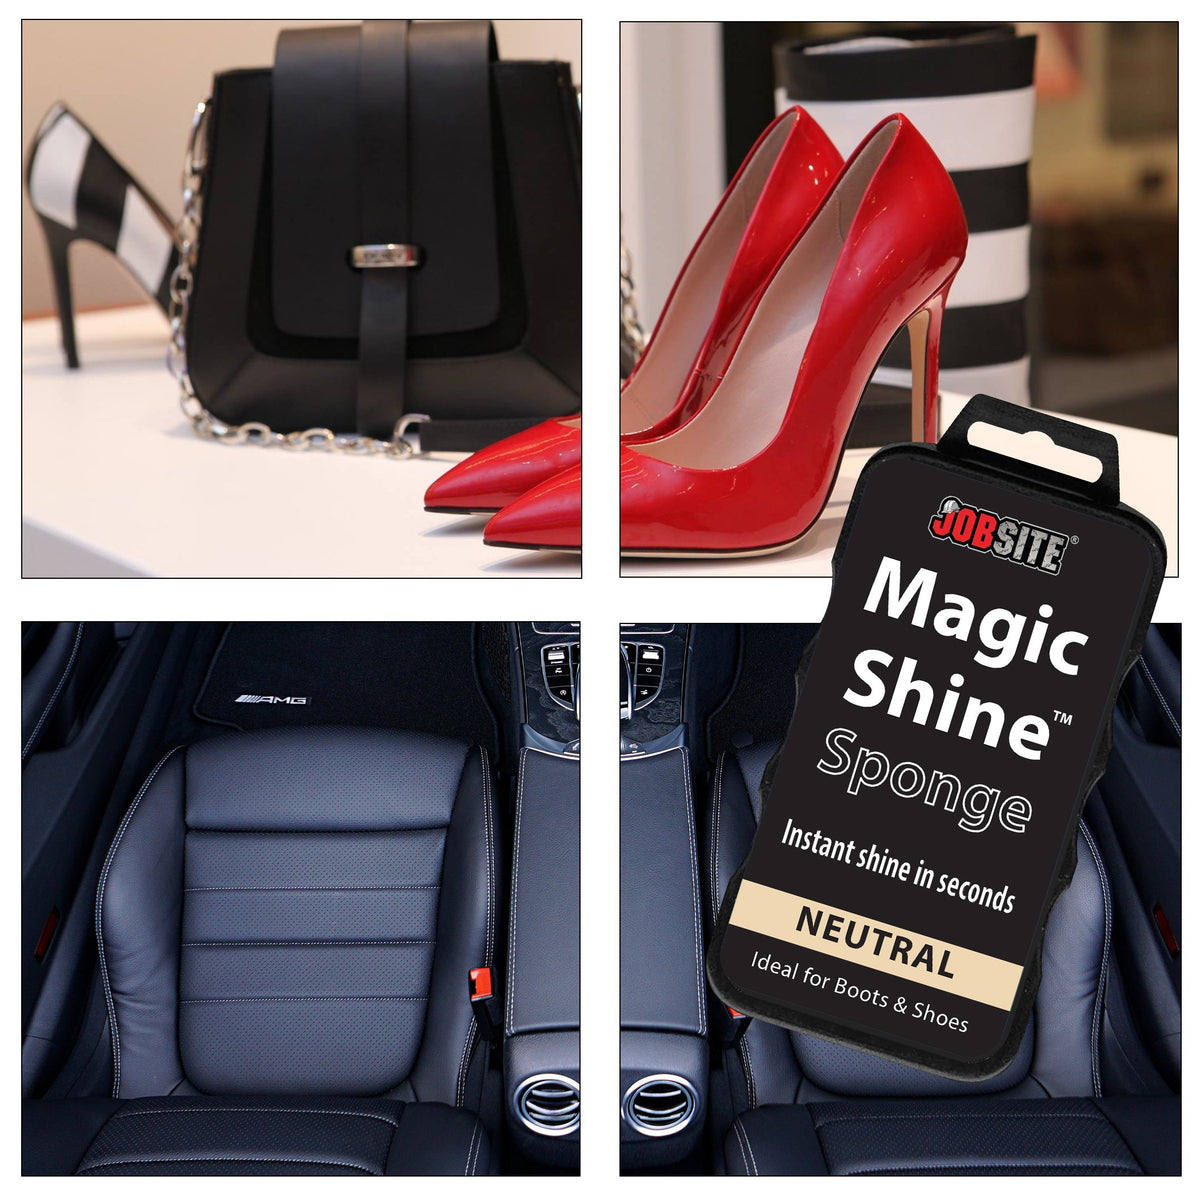 Magic Shine Sponge – JobSite Brand